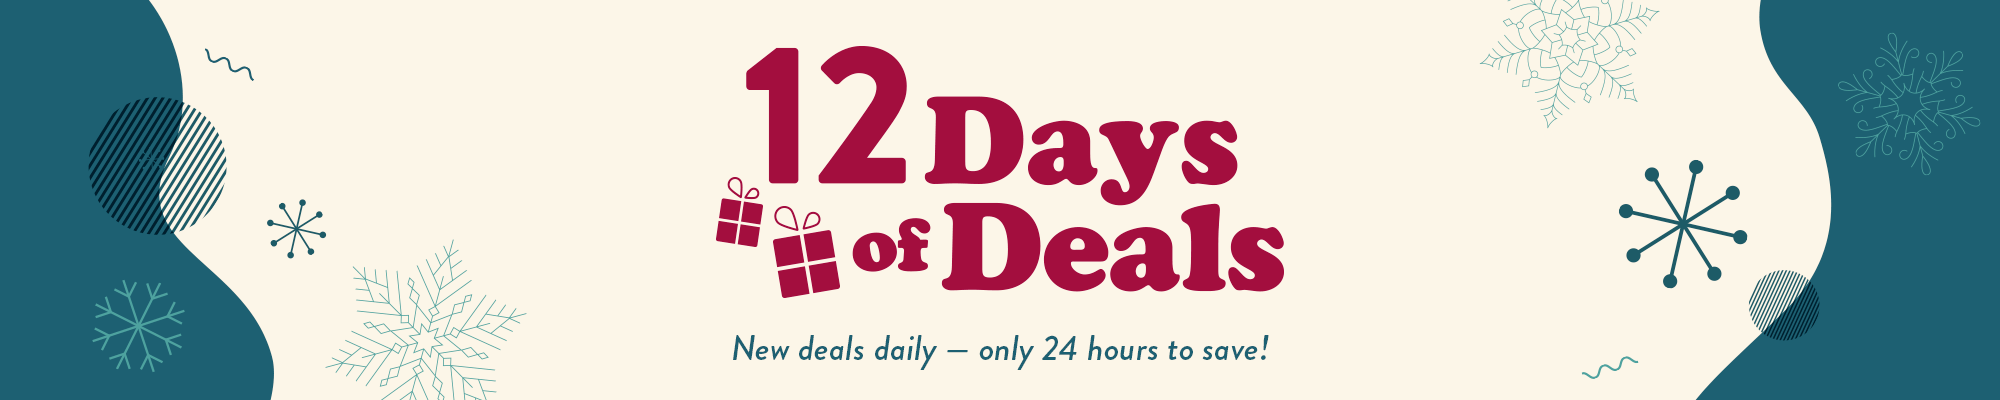 snapfish daily deals days